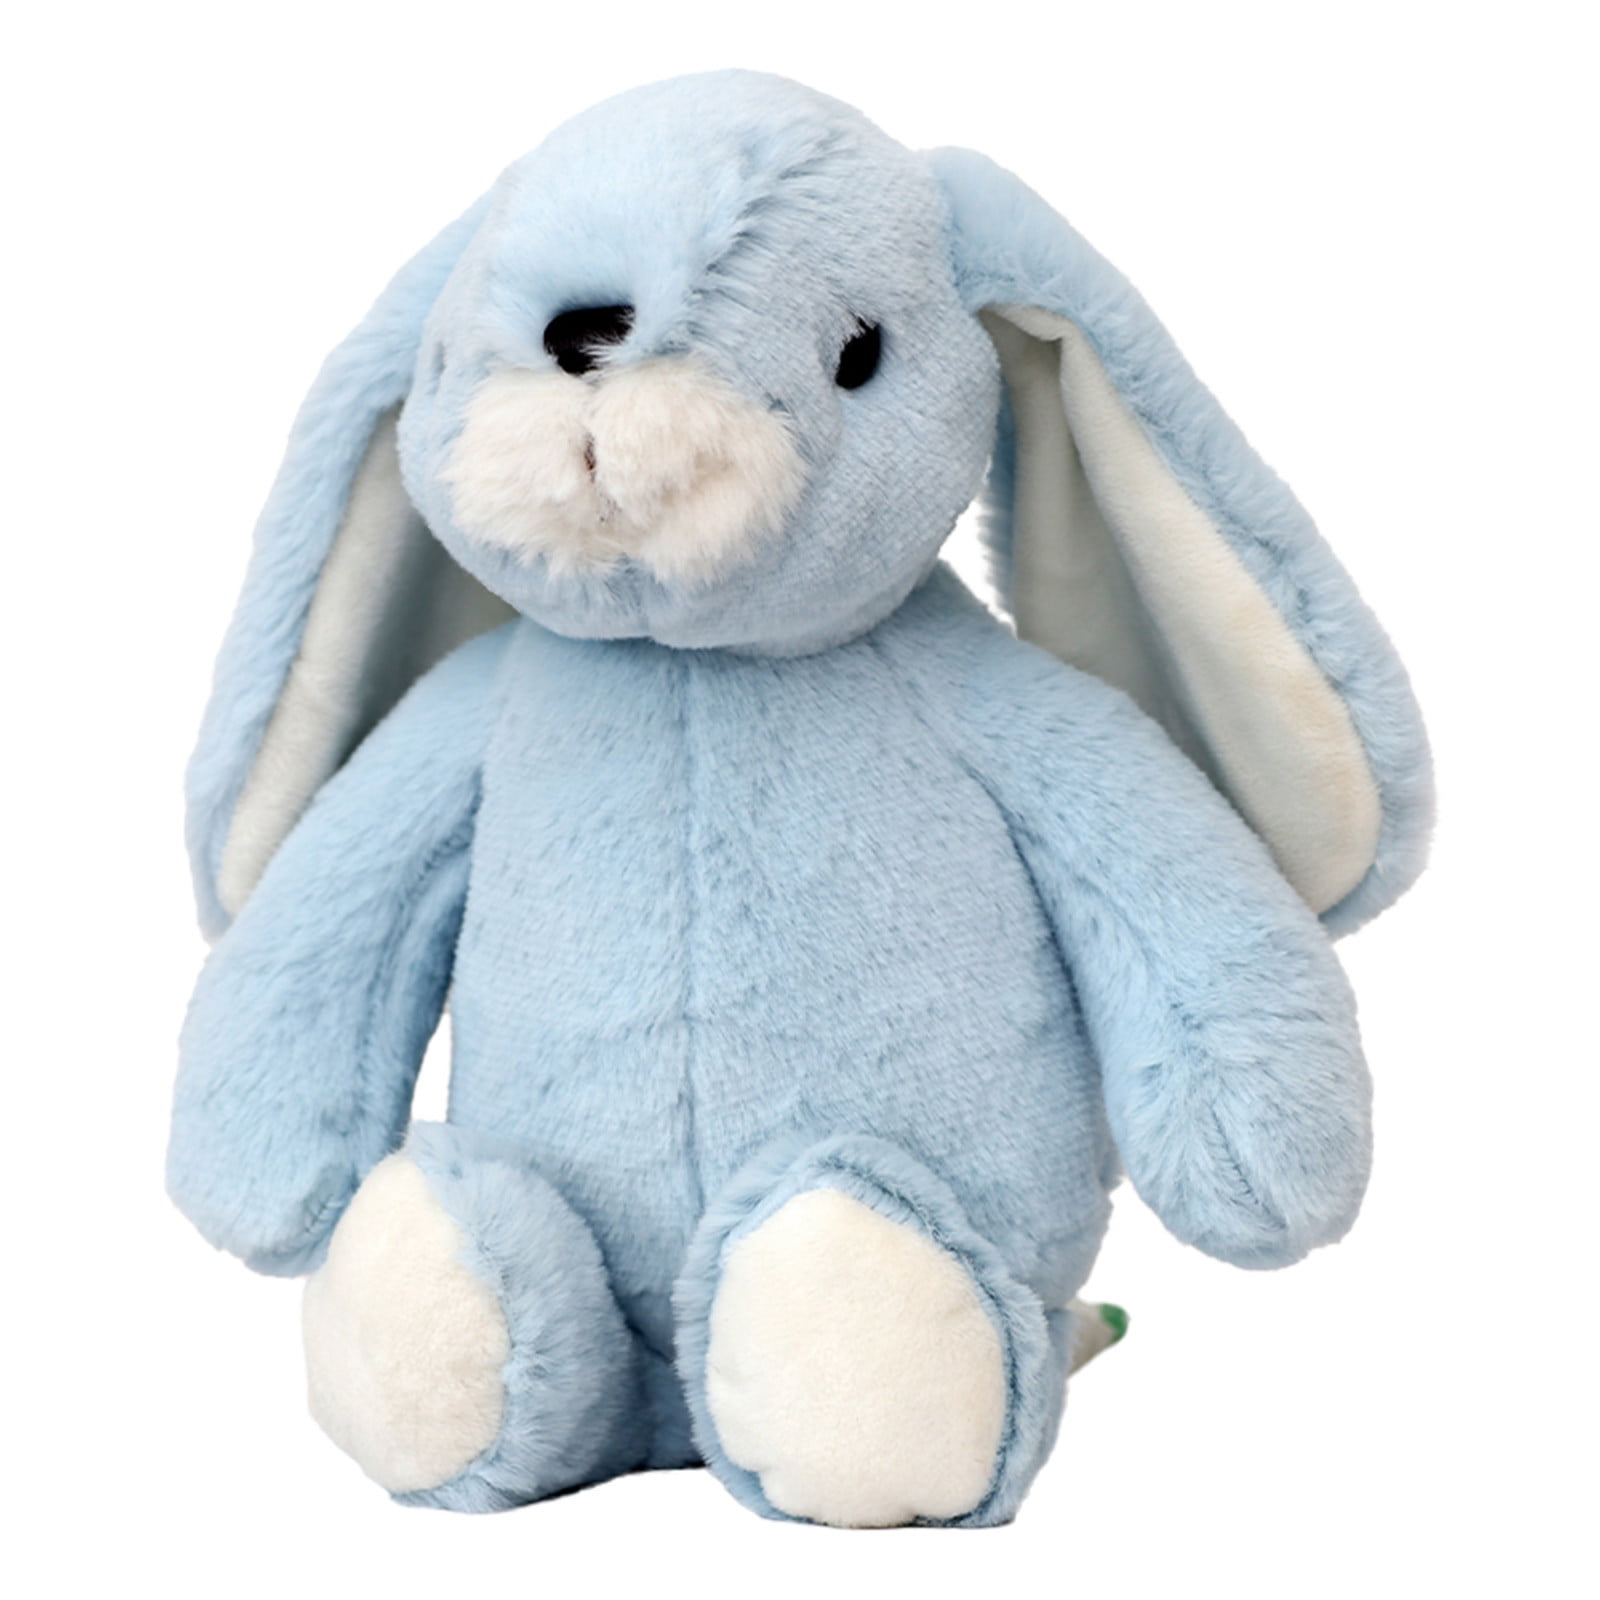 Cute Bunny Soft Plush Toy Rabbit Stuffed Animal Baby Kids Gift Animals Doll 